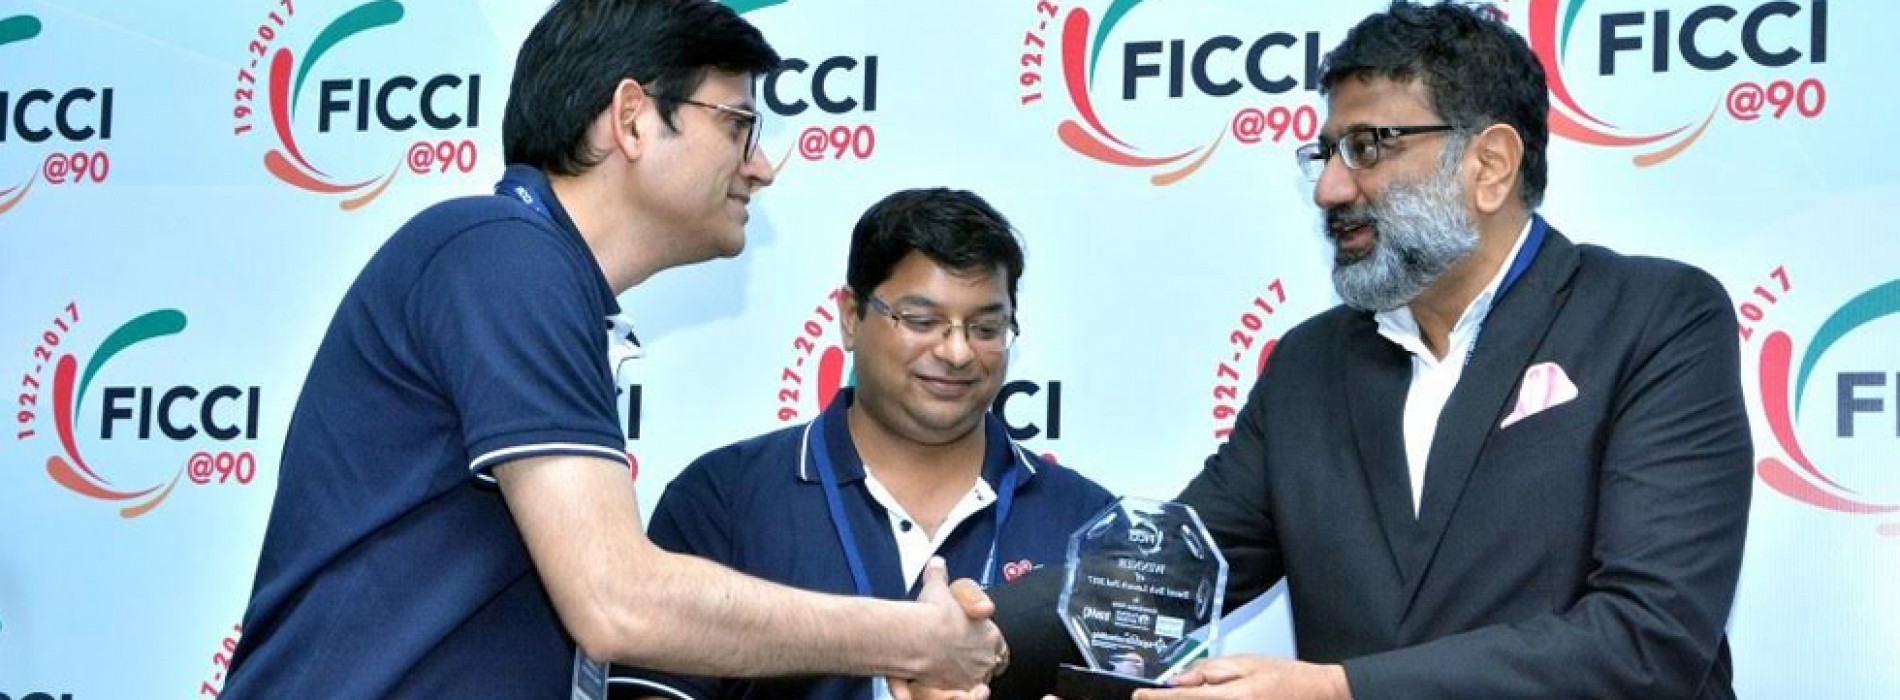 DistancesBetween.com wins People’s Choice Award at FICCI Travel Tech Launchpad 2017